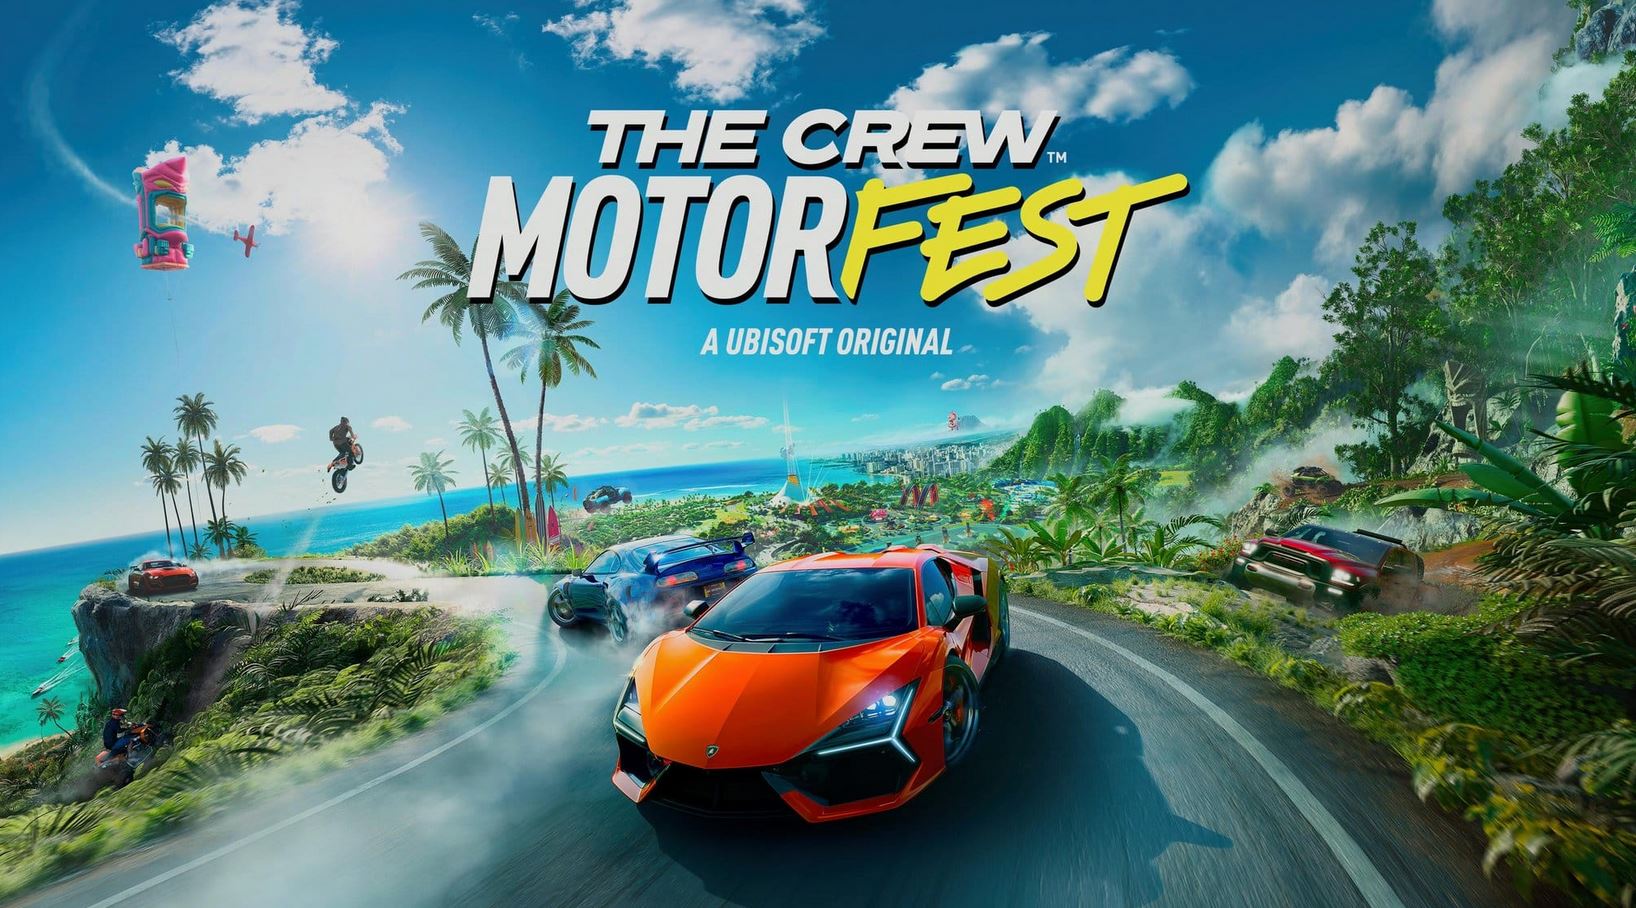 The Crew Motorfest Ultimate Edition PC (Ubisoft Connect) EU